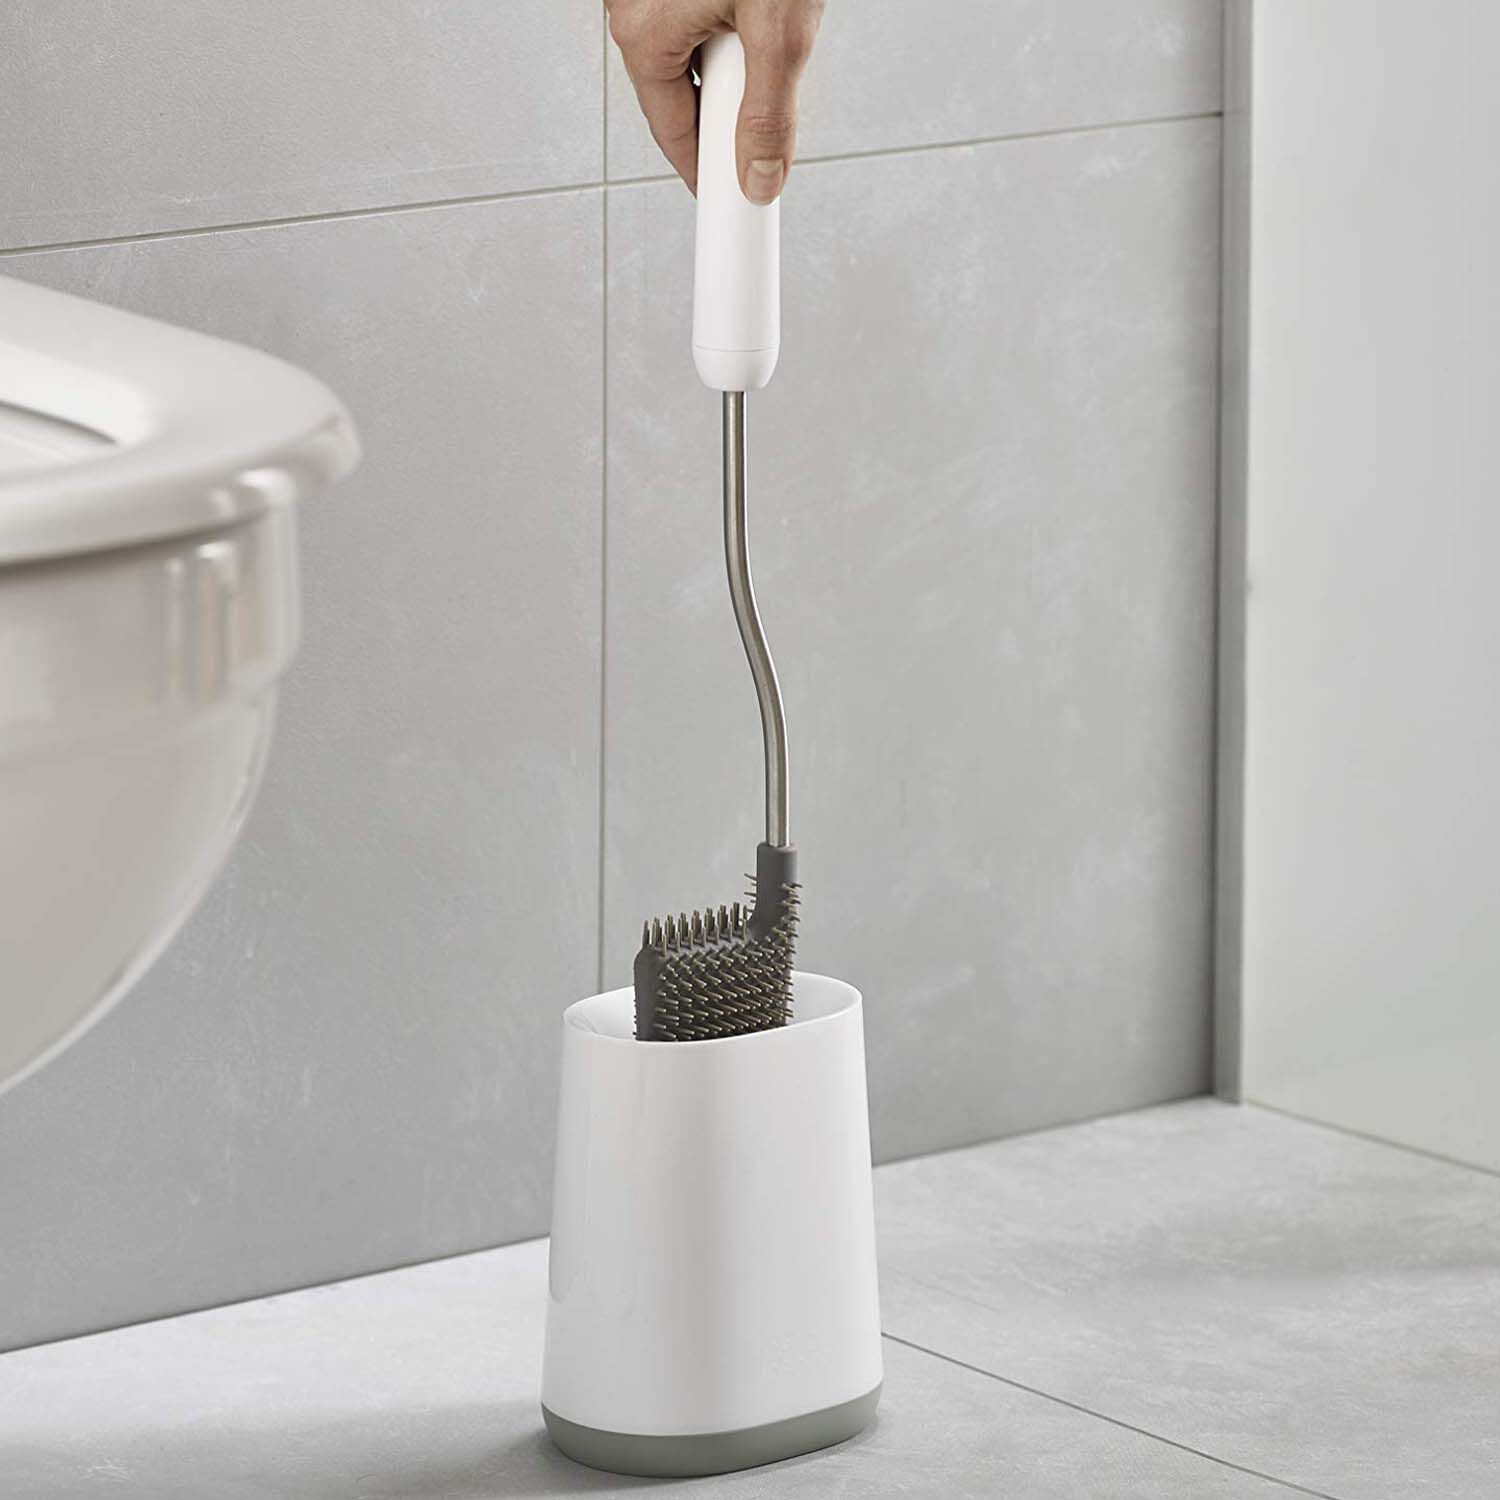 Joseph Joseph Duo Flex Toilet + More Store - Home Lite Brush